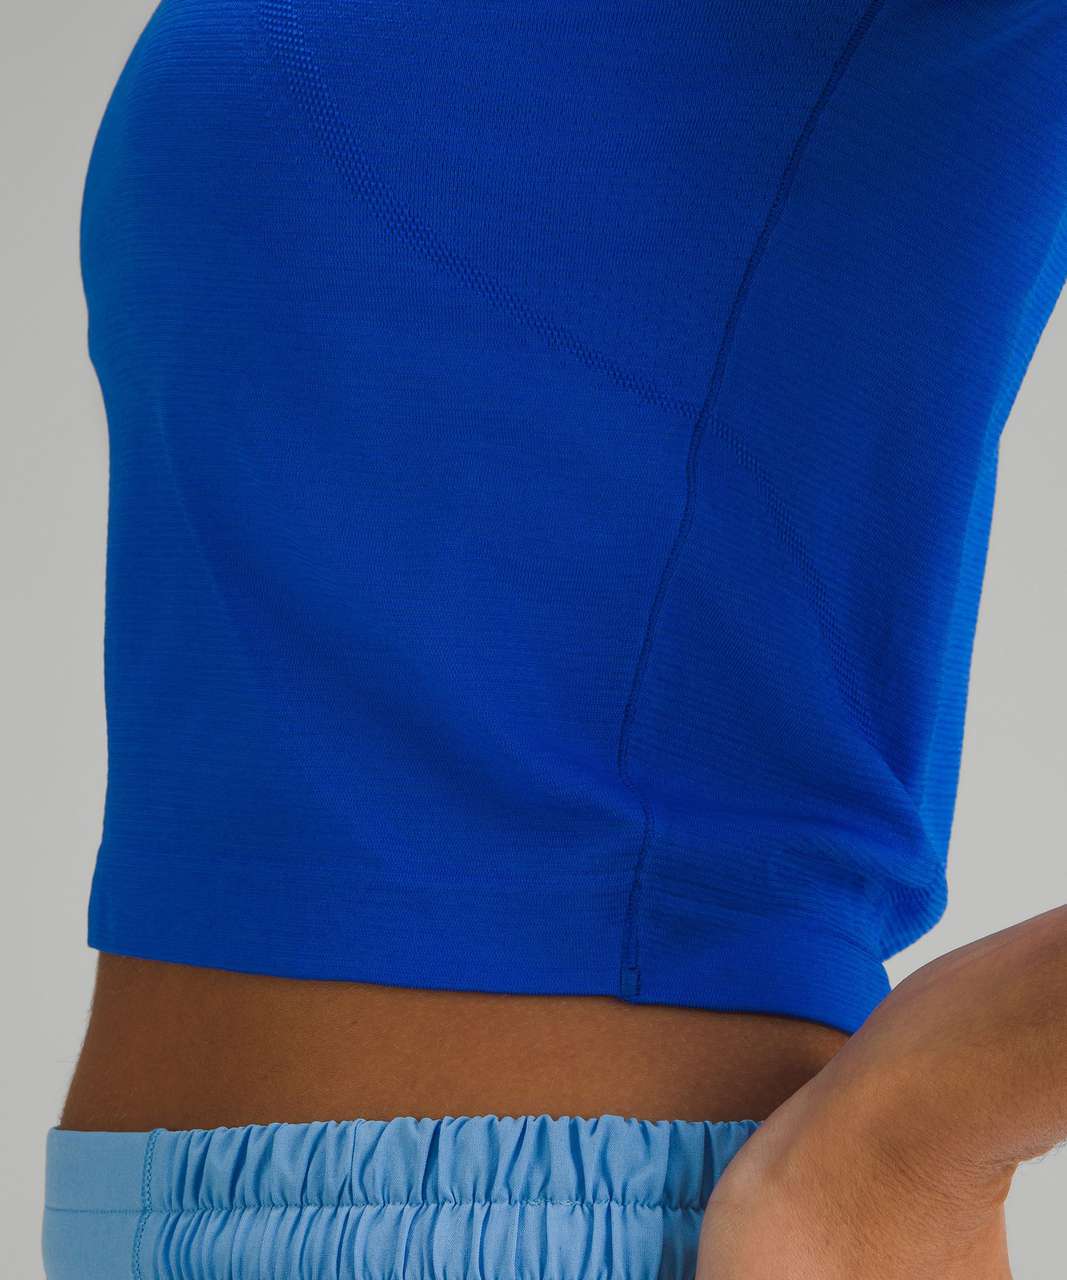 Lululemon Swiftly Tech Cropped Short-Sleeve Shirt 2.0 - Blazer Blue Tone / Blazer Blue Tone